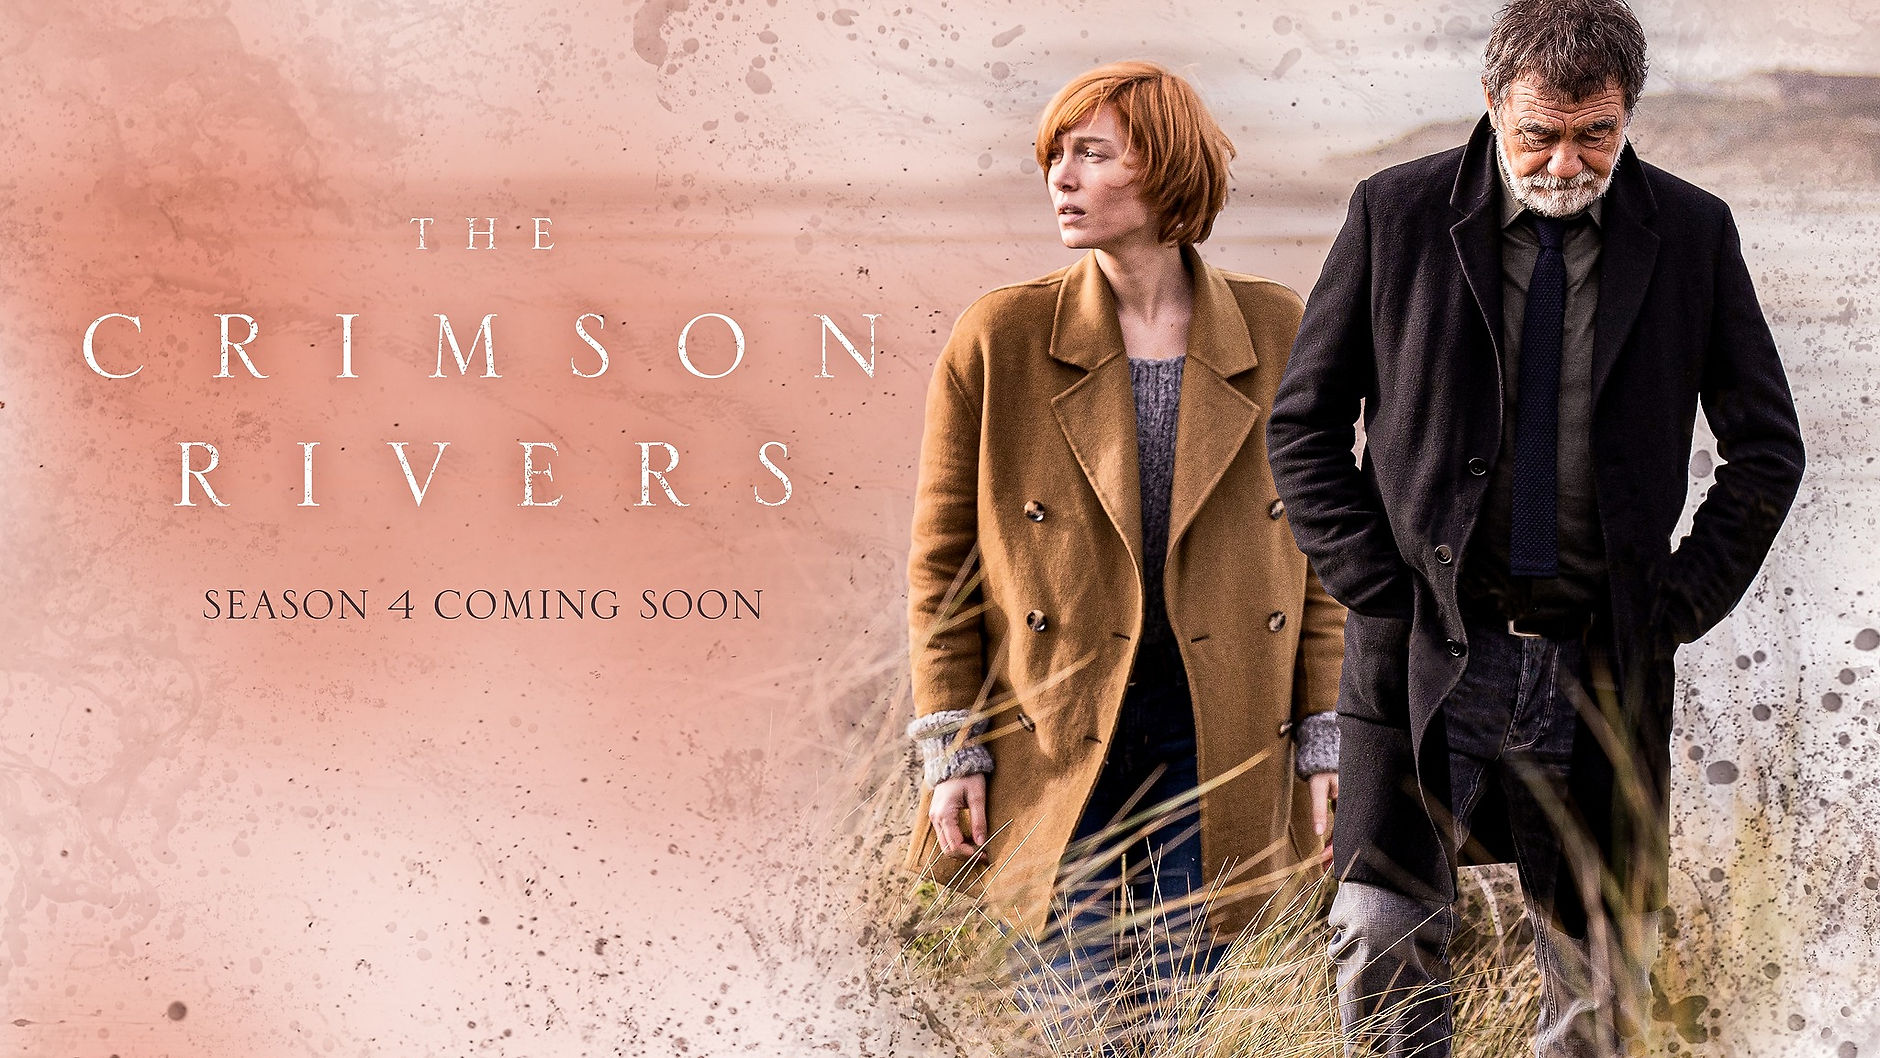 The Crimson Rivers - Season 4 Trailer